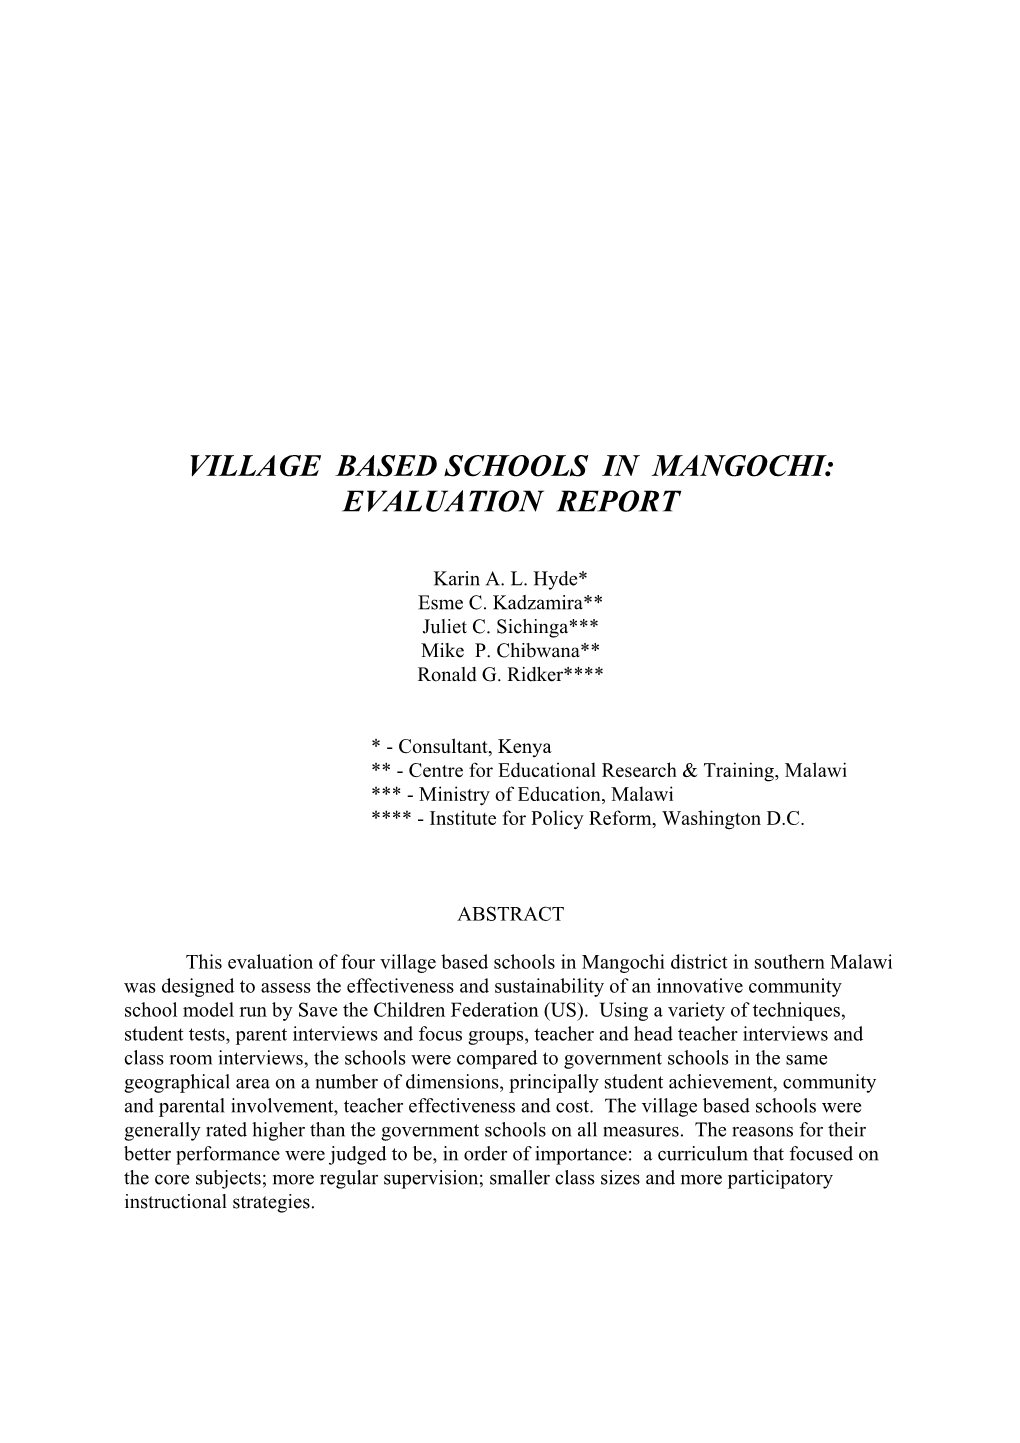 Village Based Schools in Mangochi: Evaluation Report